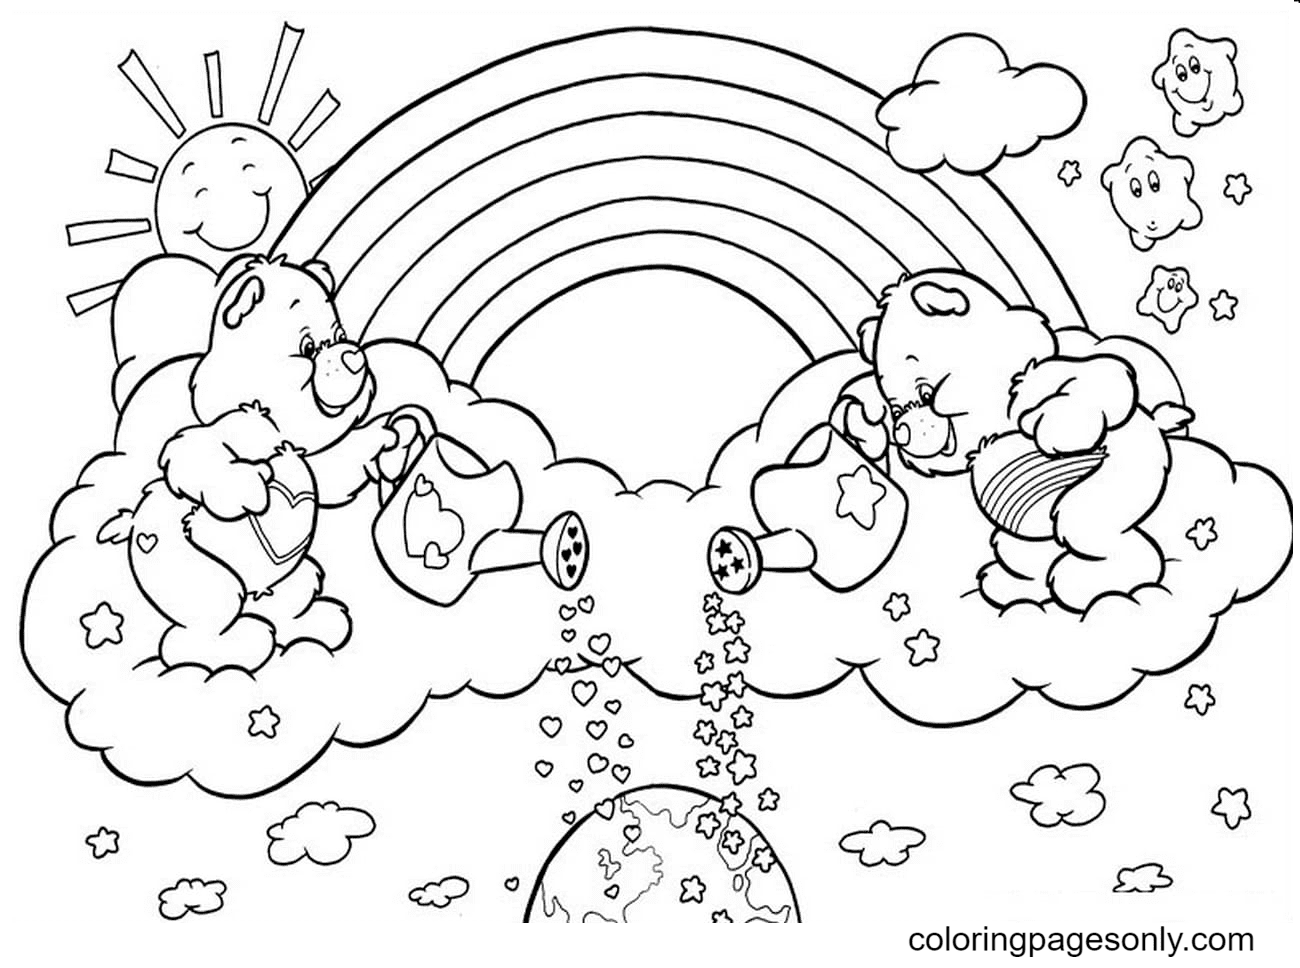 Медведи на облаке и радуга из мультфильма "Радуга"